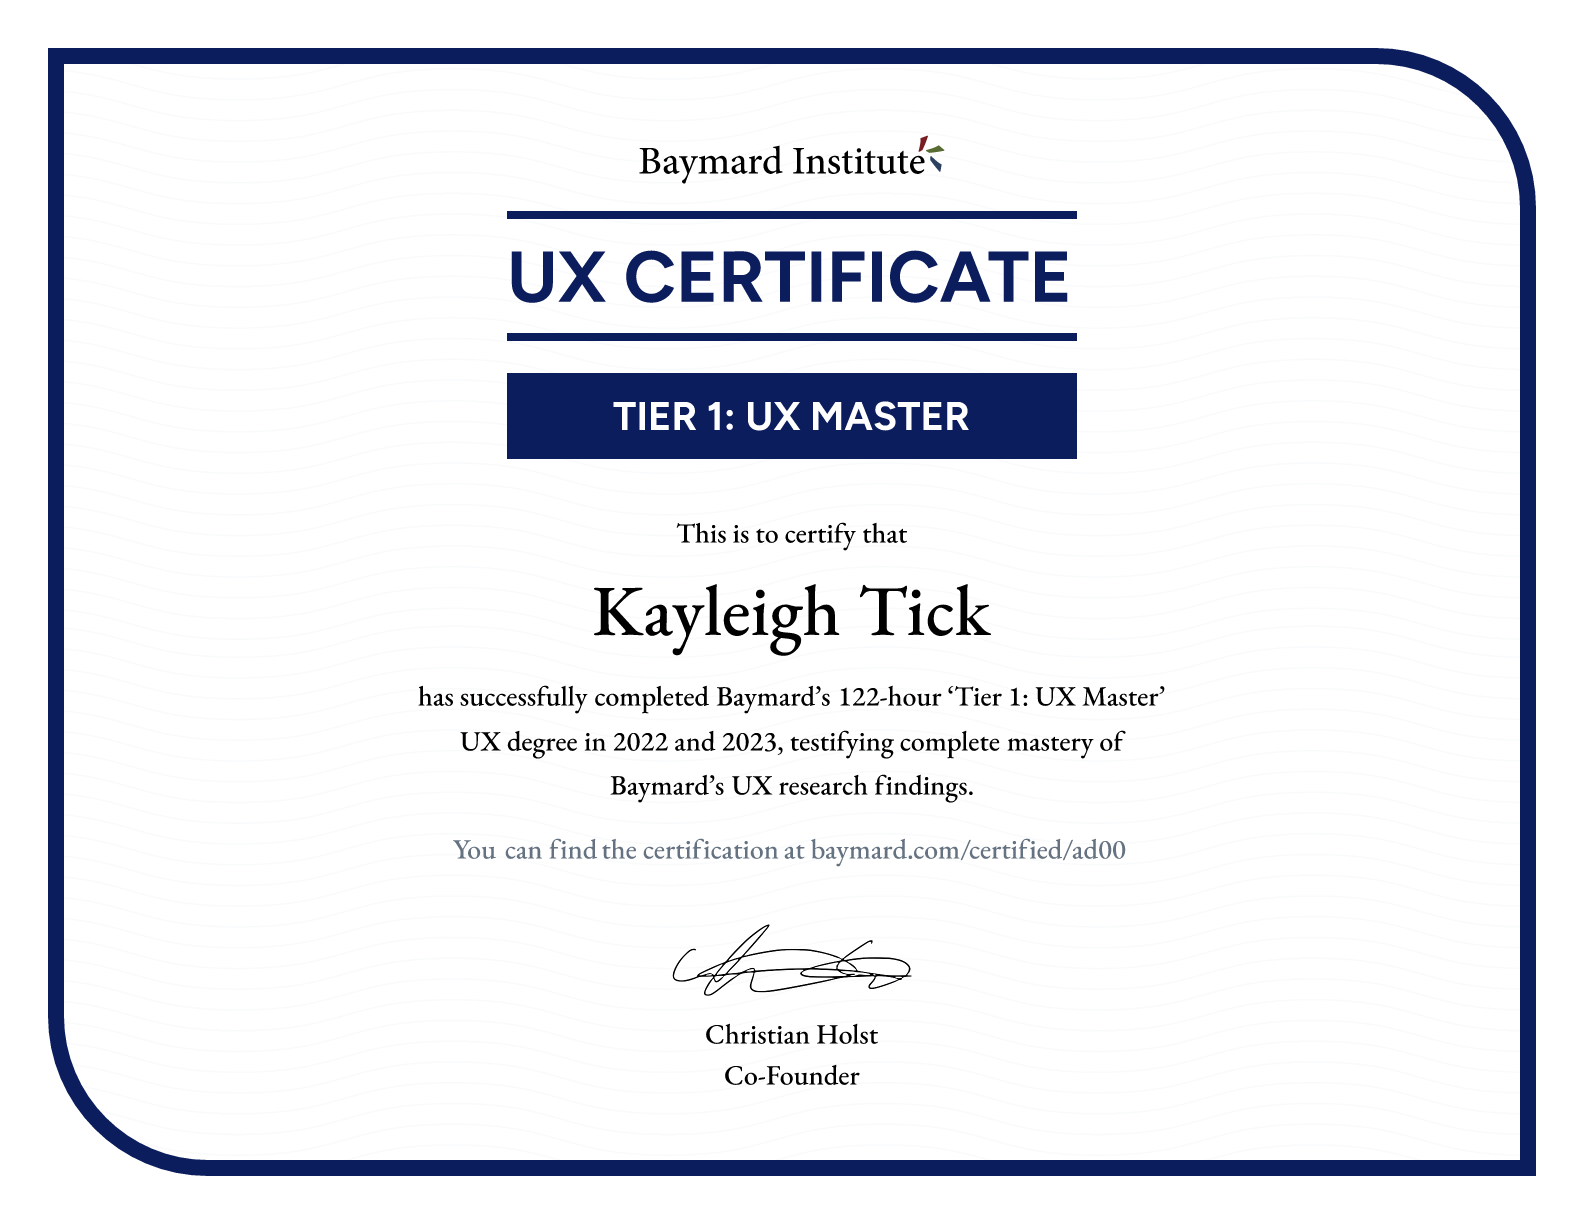 Kayleigh Tick’s certificate